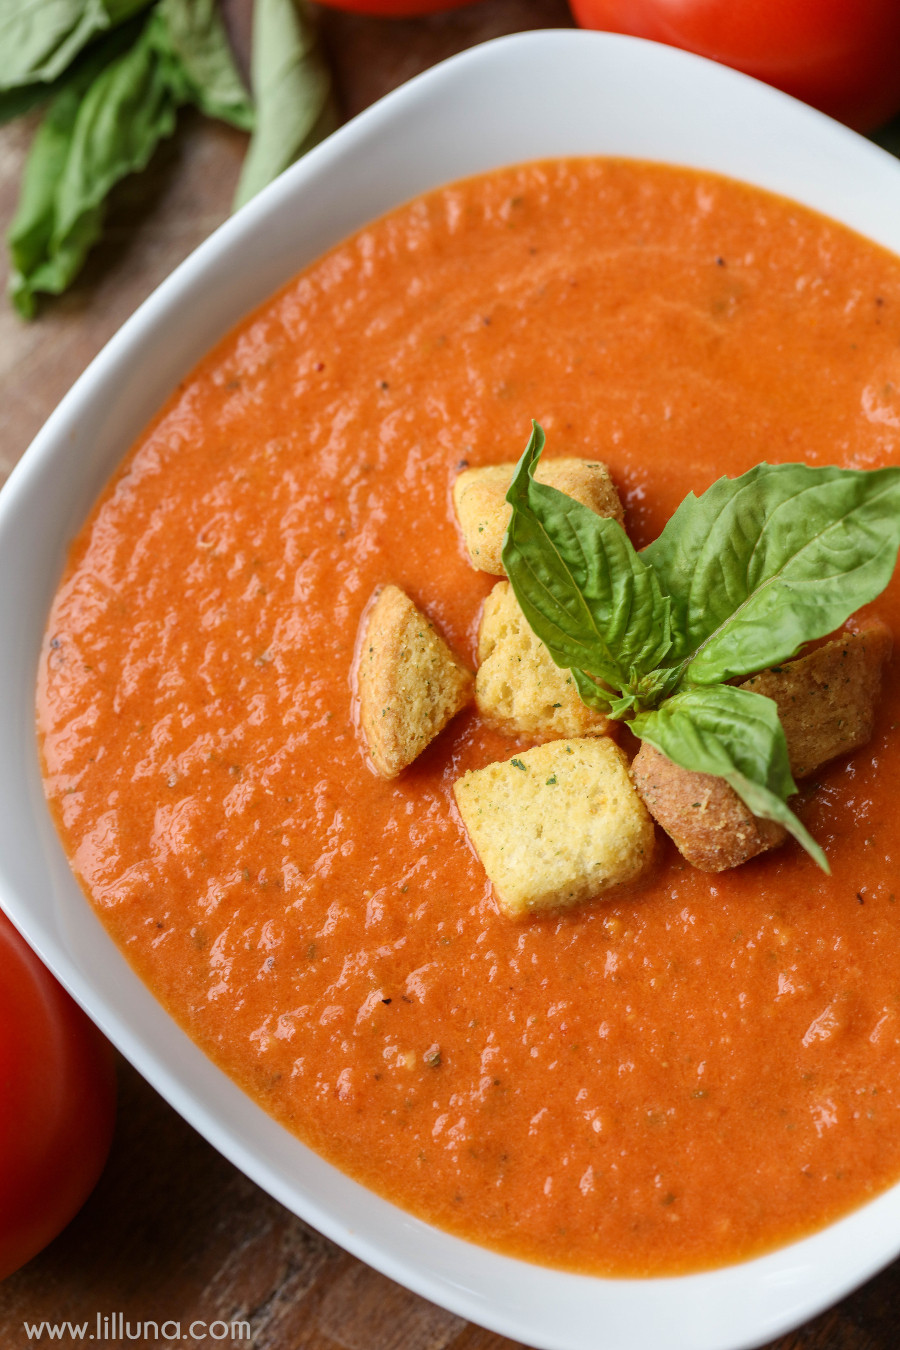 How To Make Tomato Basil Soup
 Tomato Basil Soup recipe